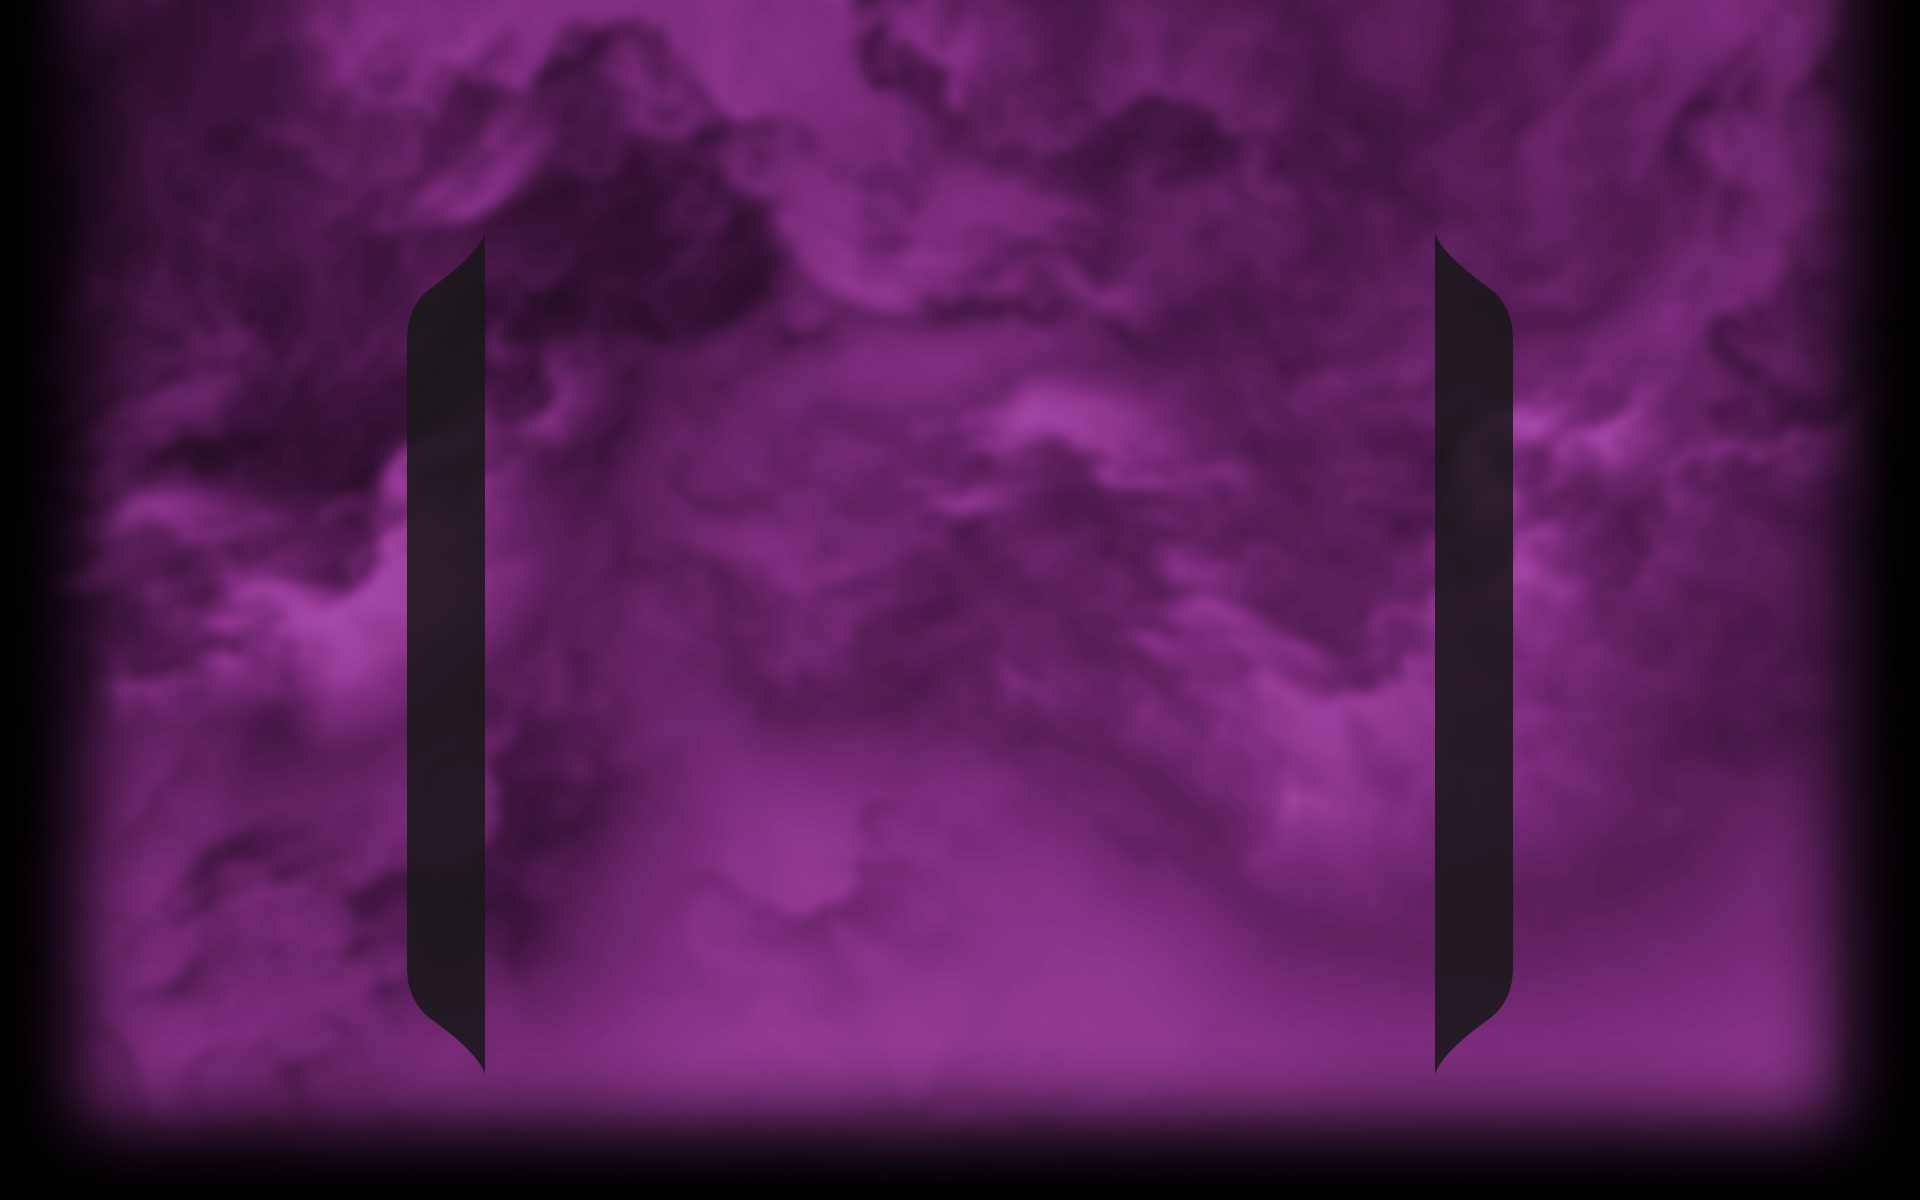 Purple Steam Wallpaper 53528 1920x1080px